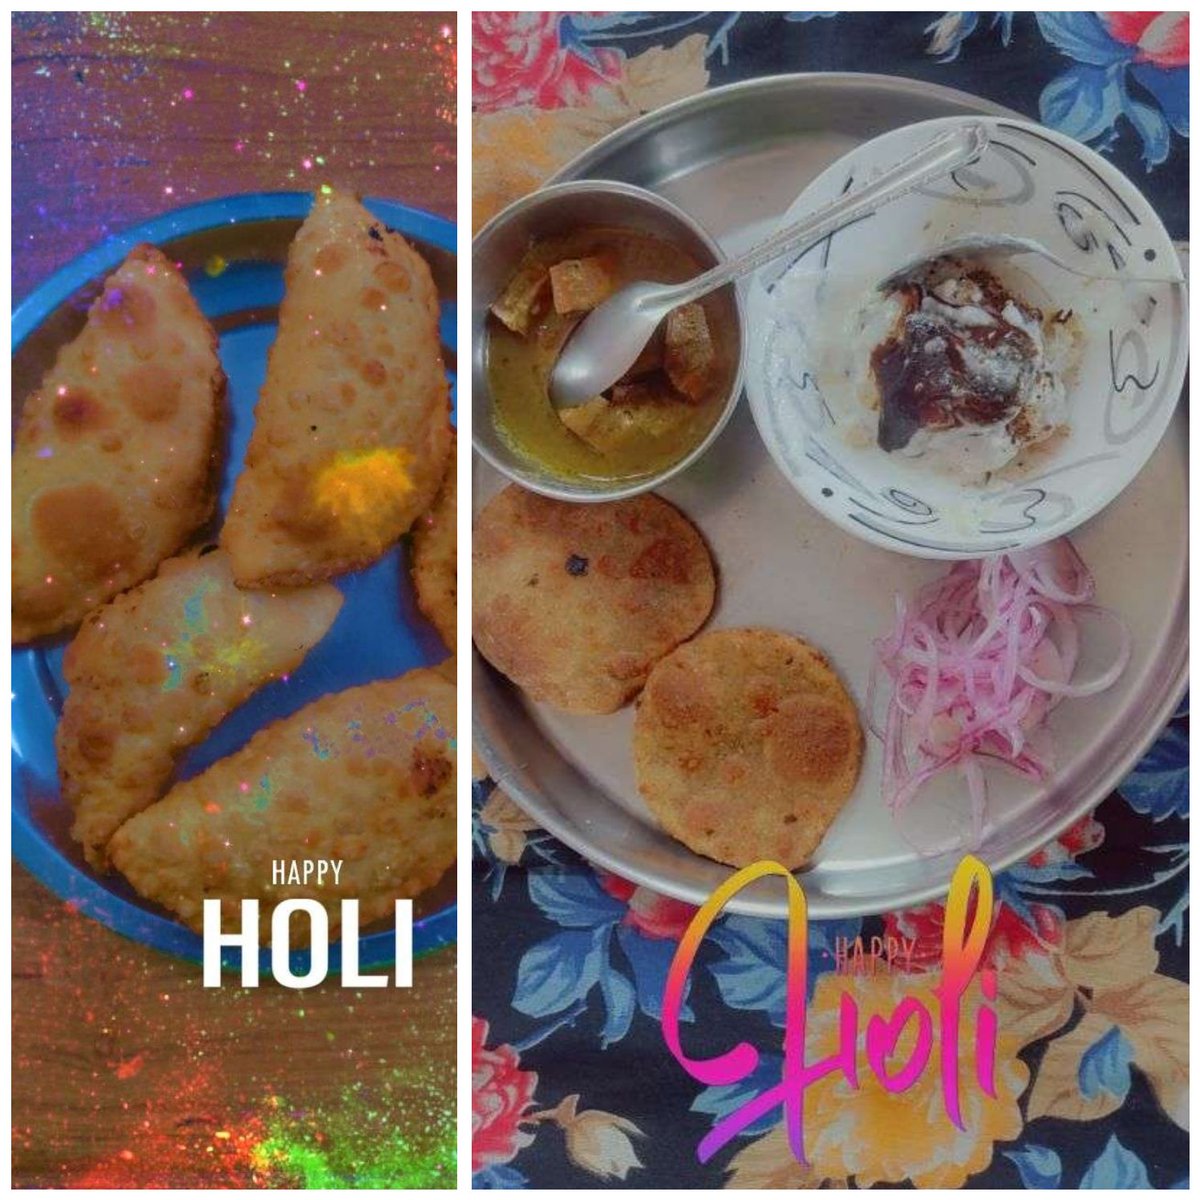 Holi is incomplete without tasty food 💕💕
#gharkakhana
#tasty